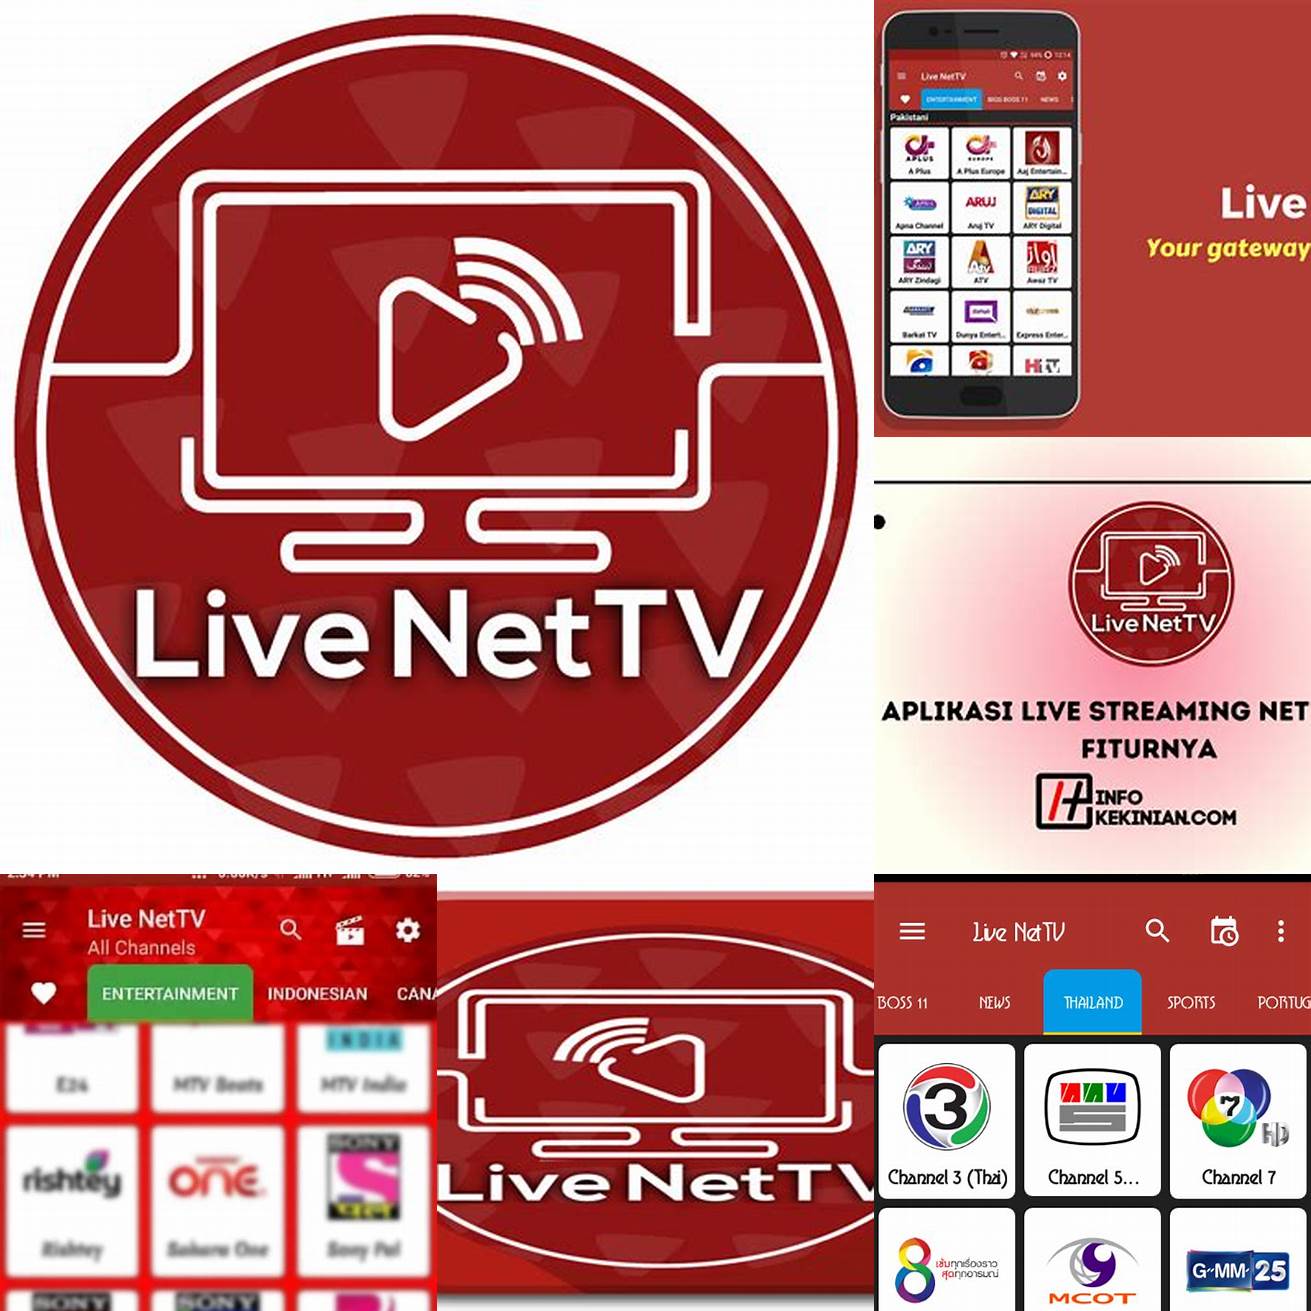 2 Live NetTV